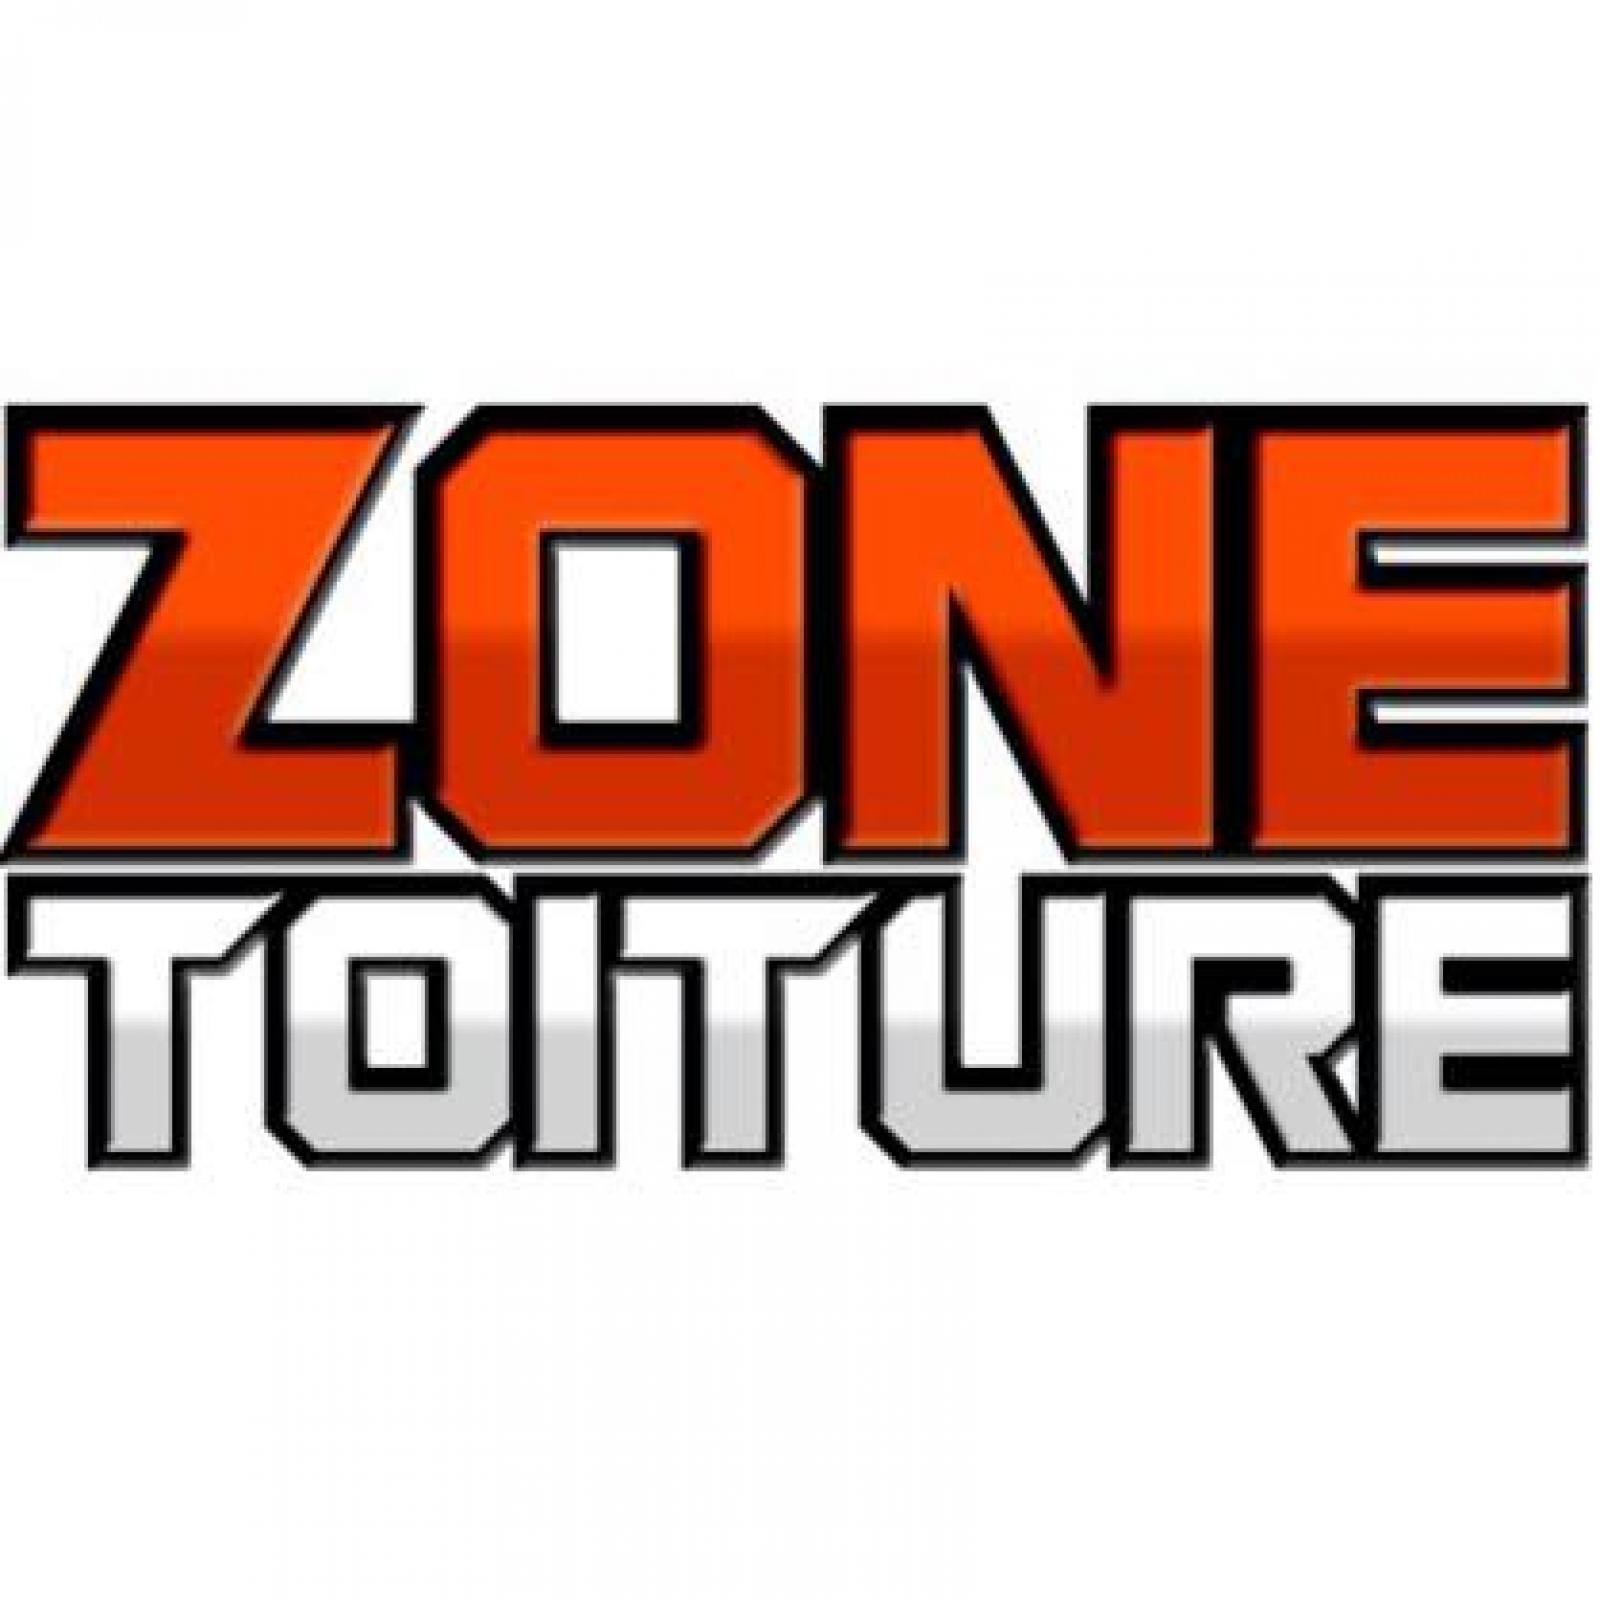 Zone toiture Logo